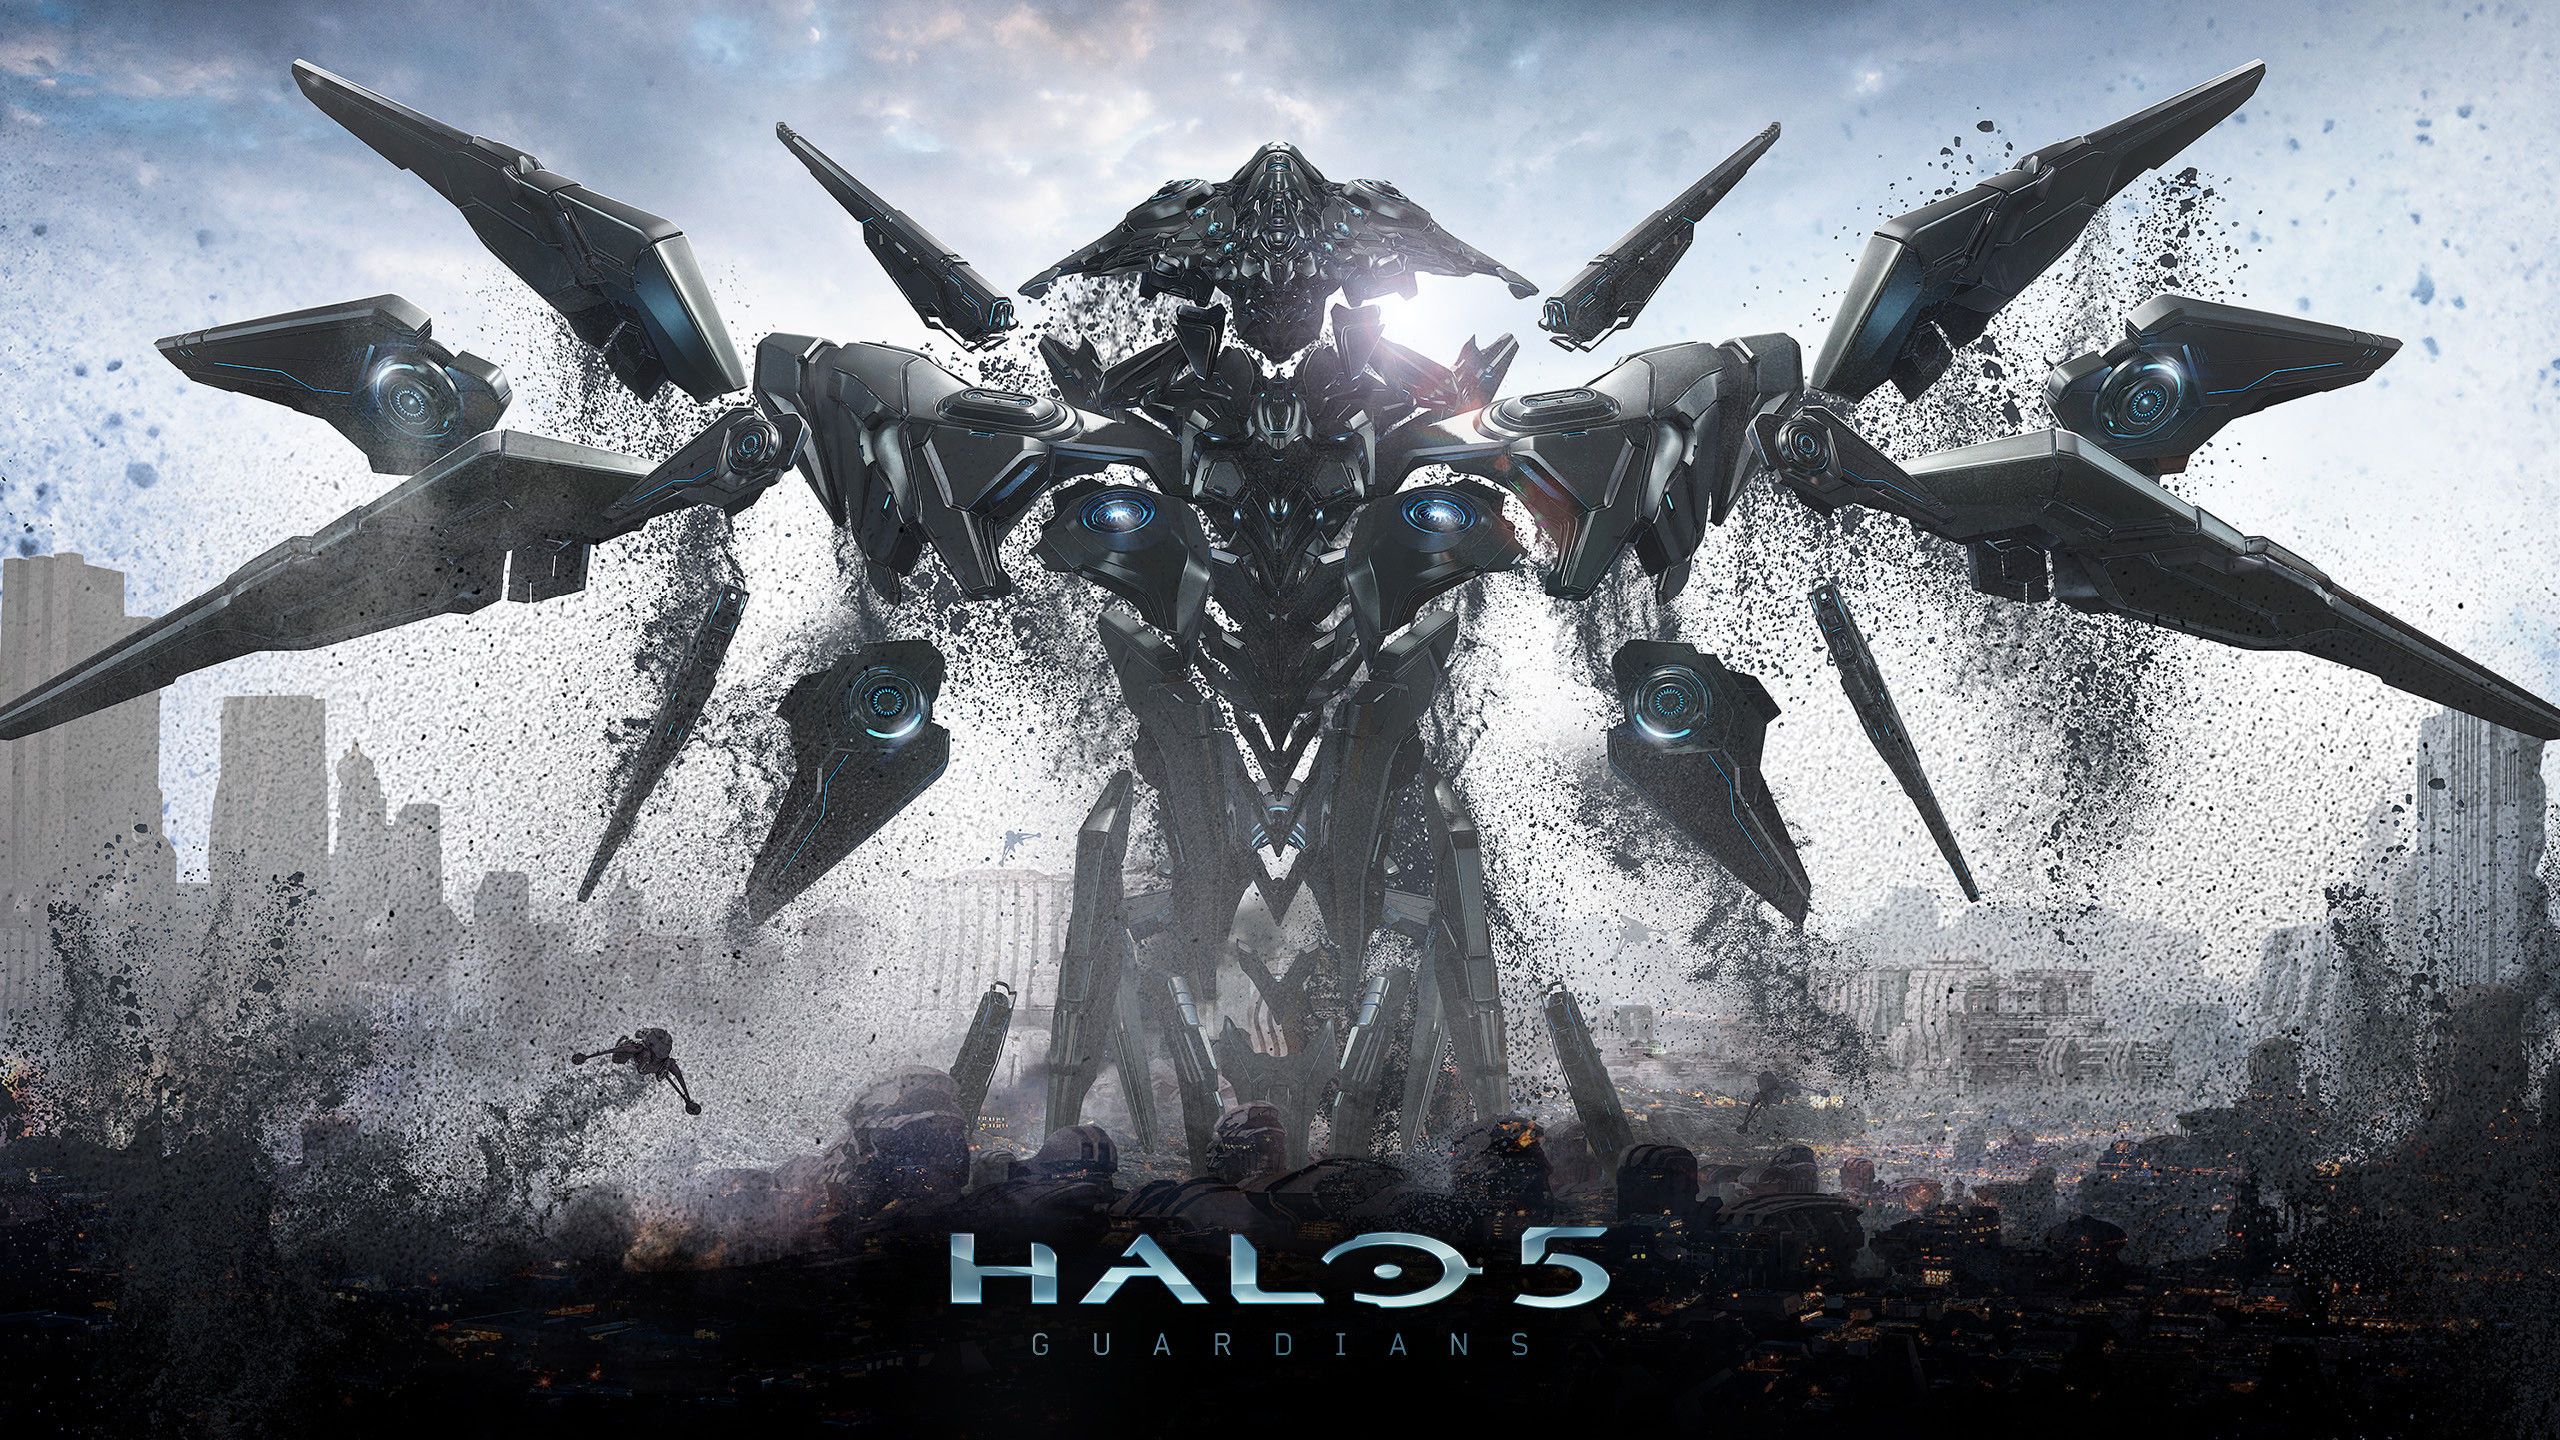 Halo 5 Guardians -Guardian Wallpaper